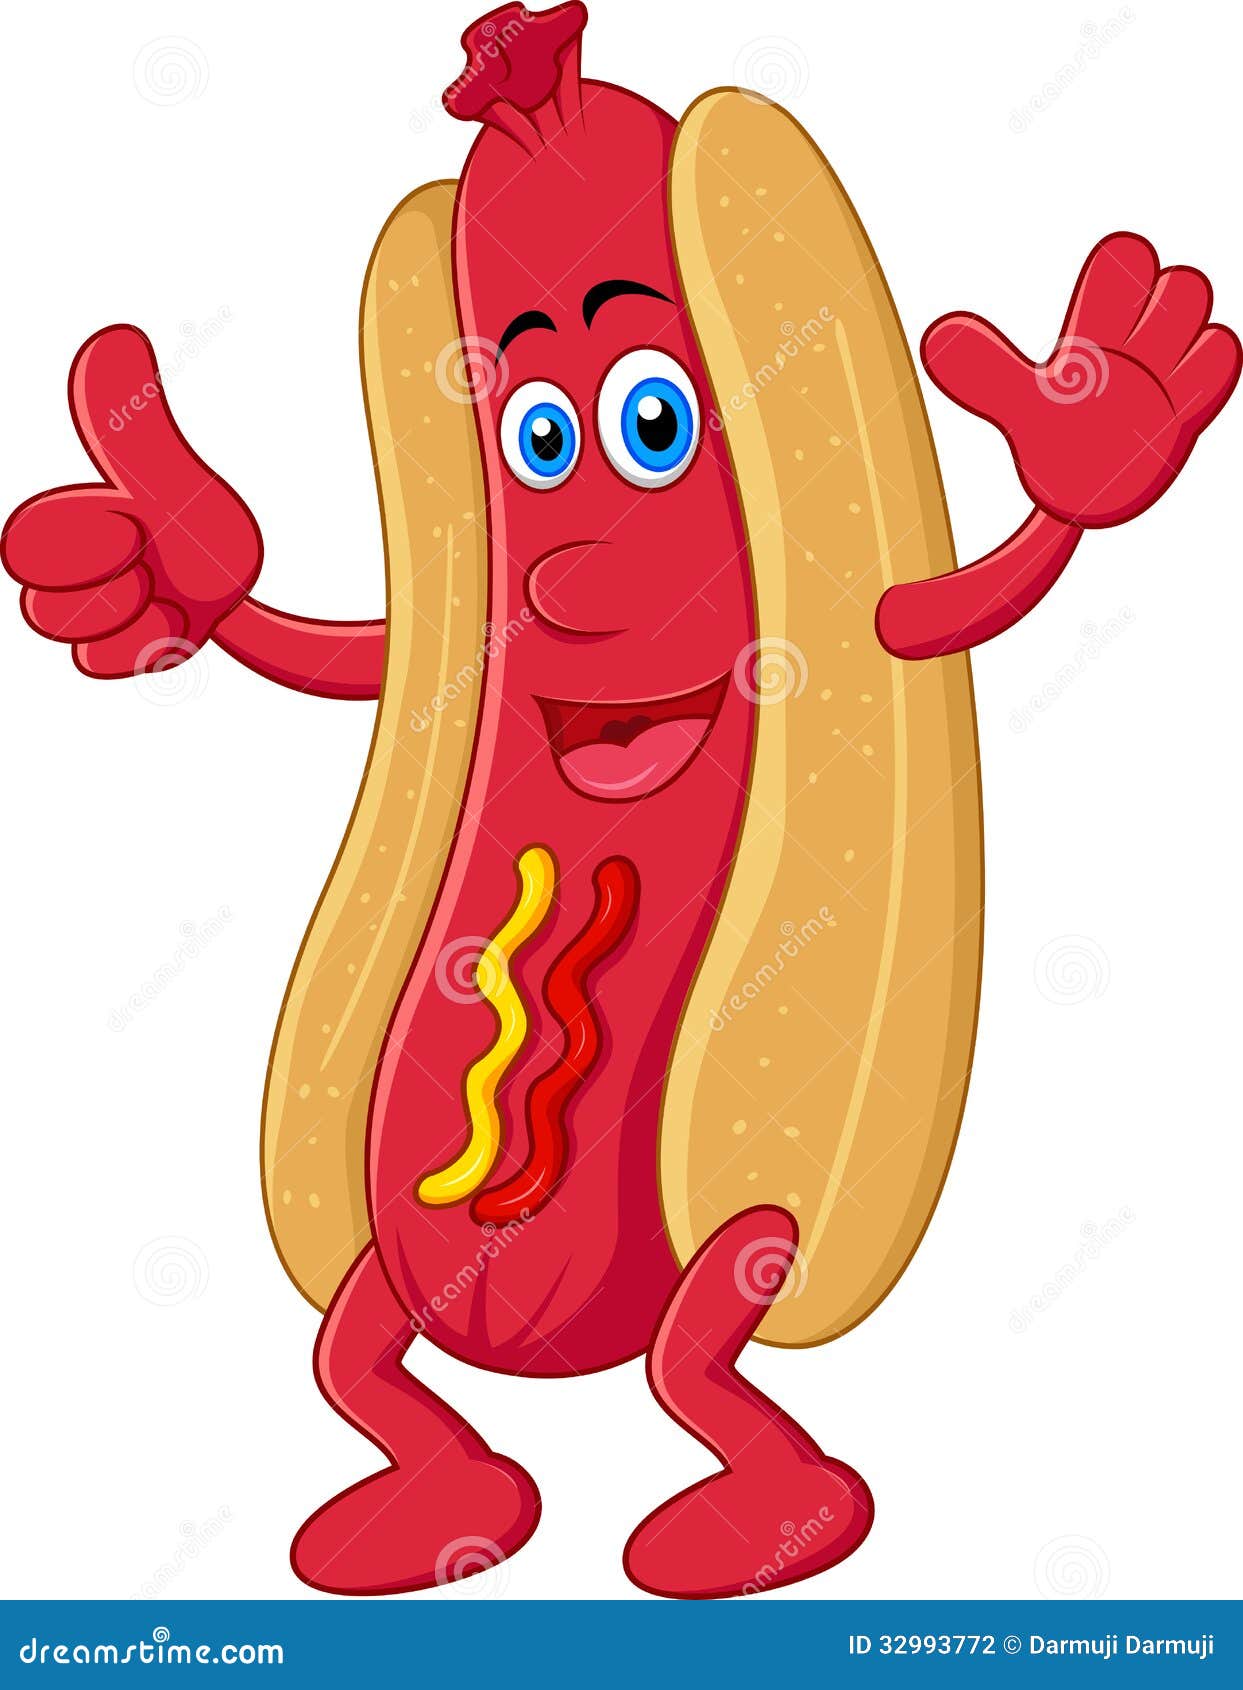 Hot Dog Cartoon Images